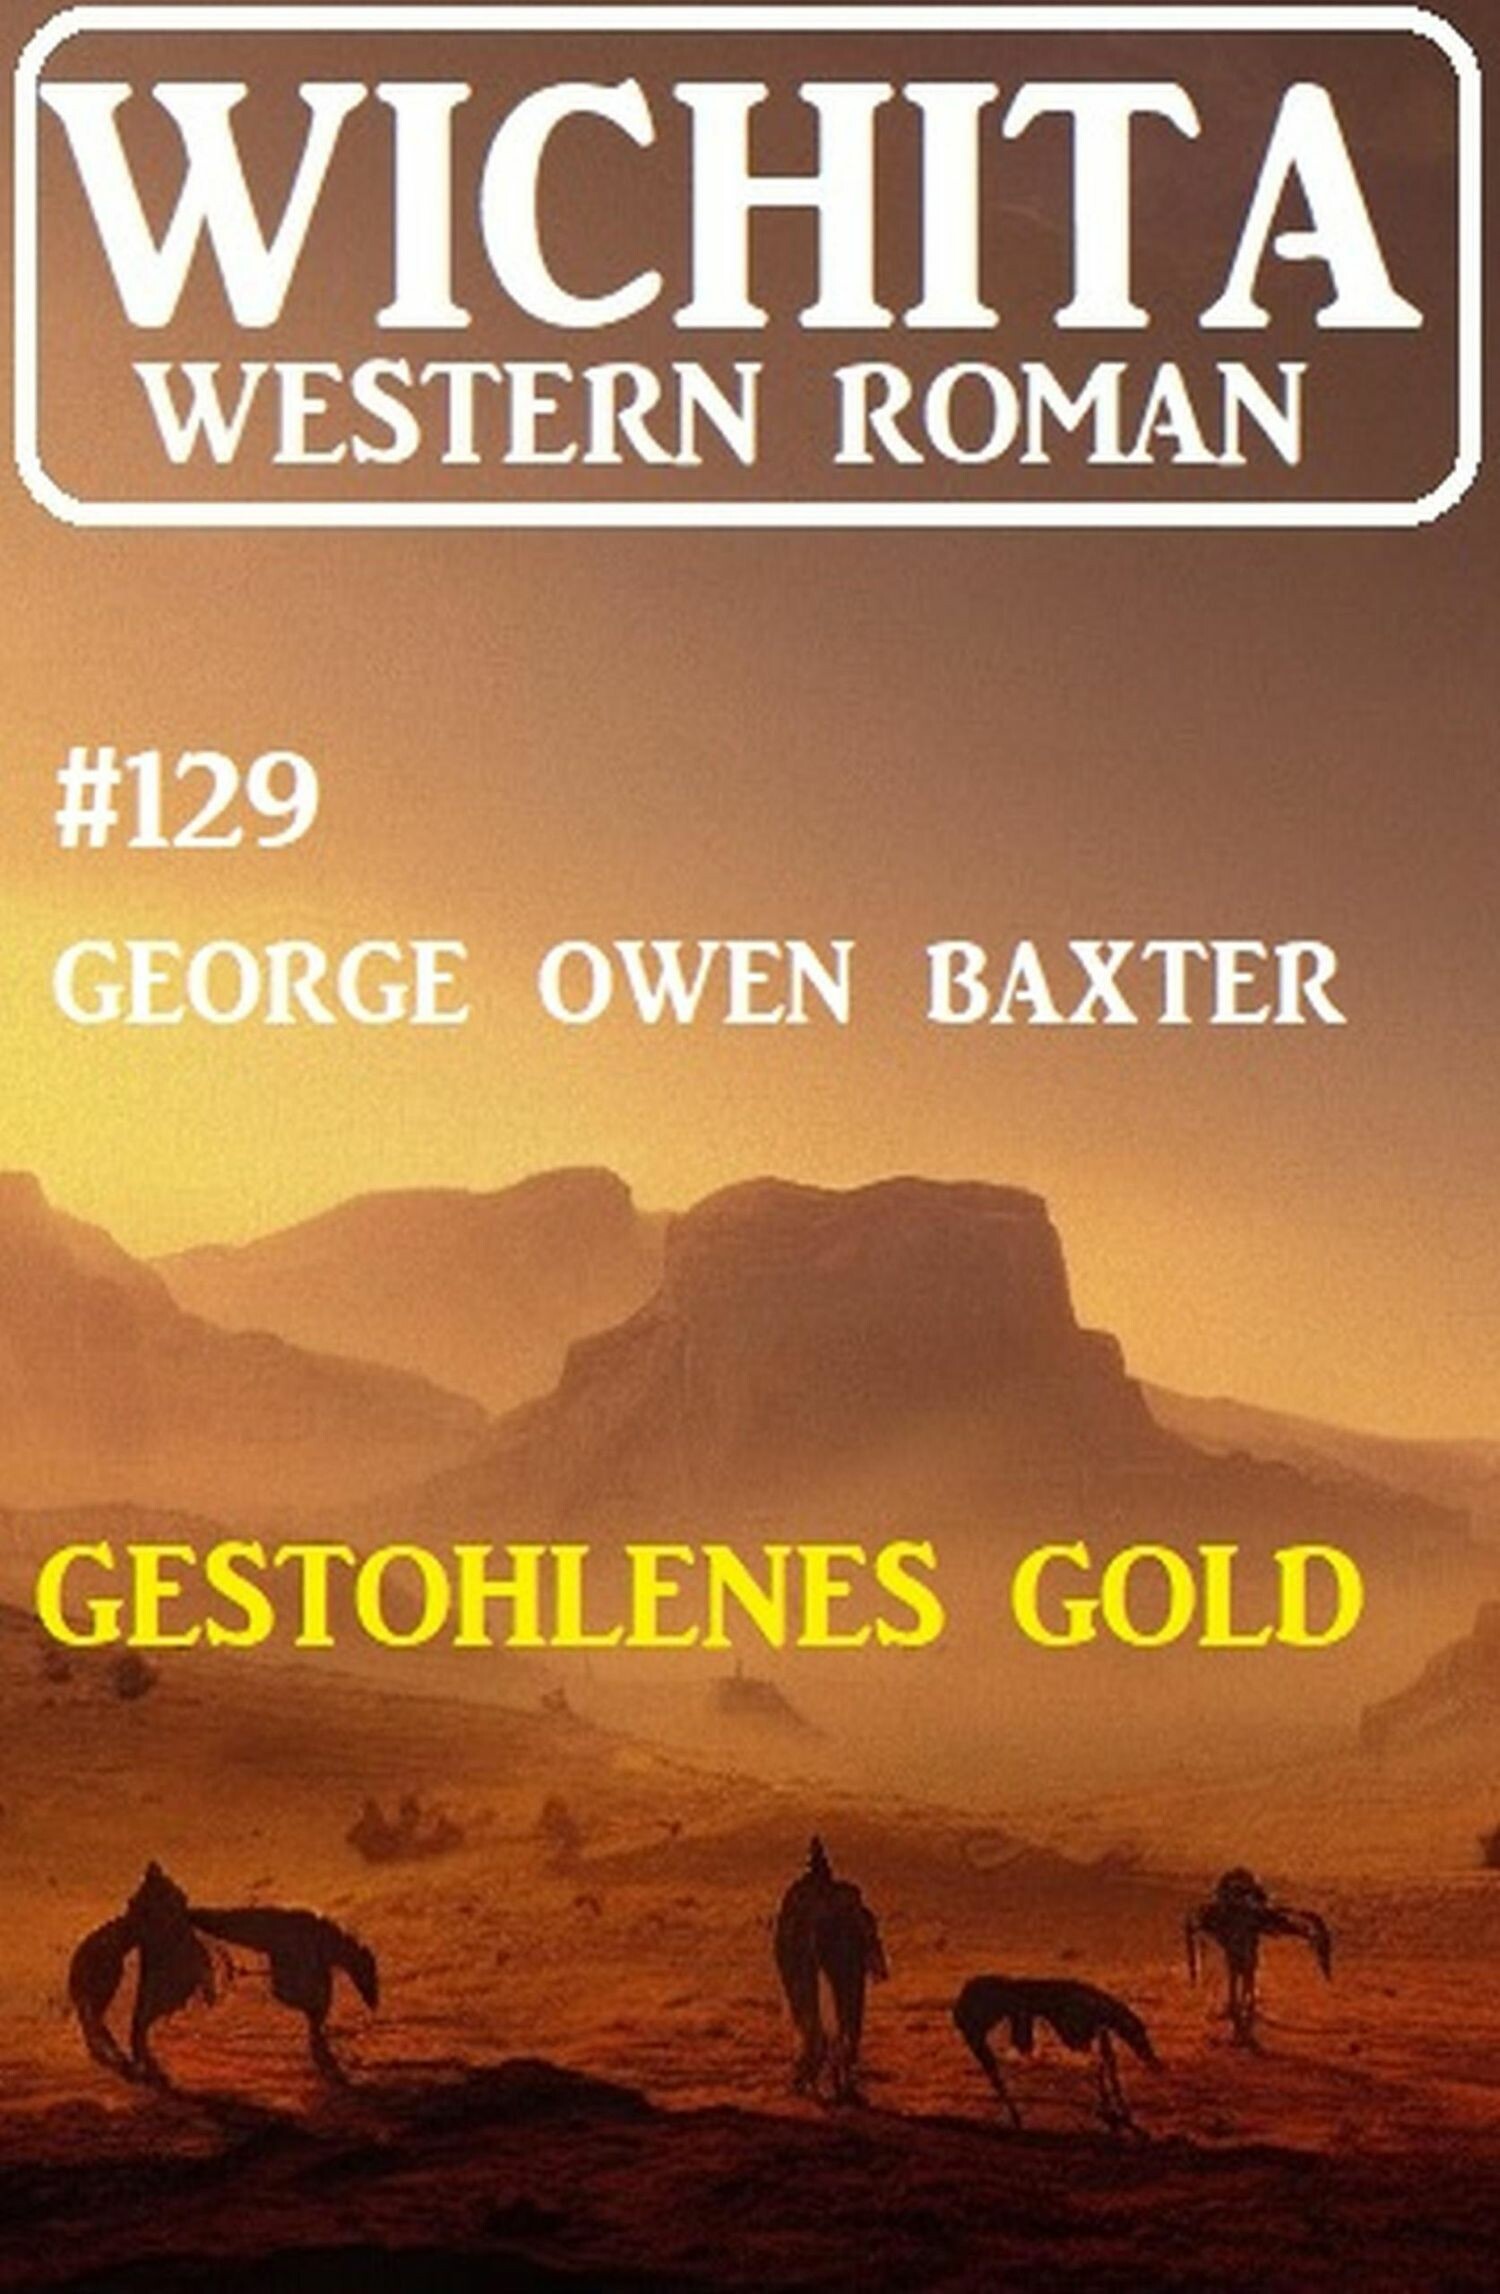 Gestohlenes Gold: Wichita Western Roman 129